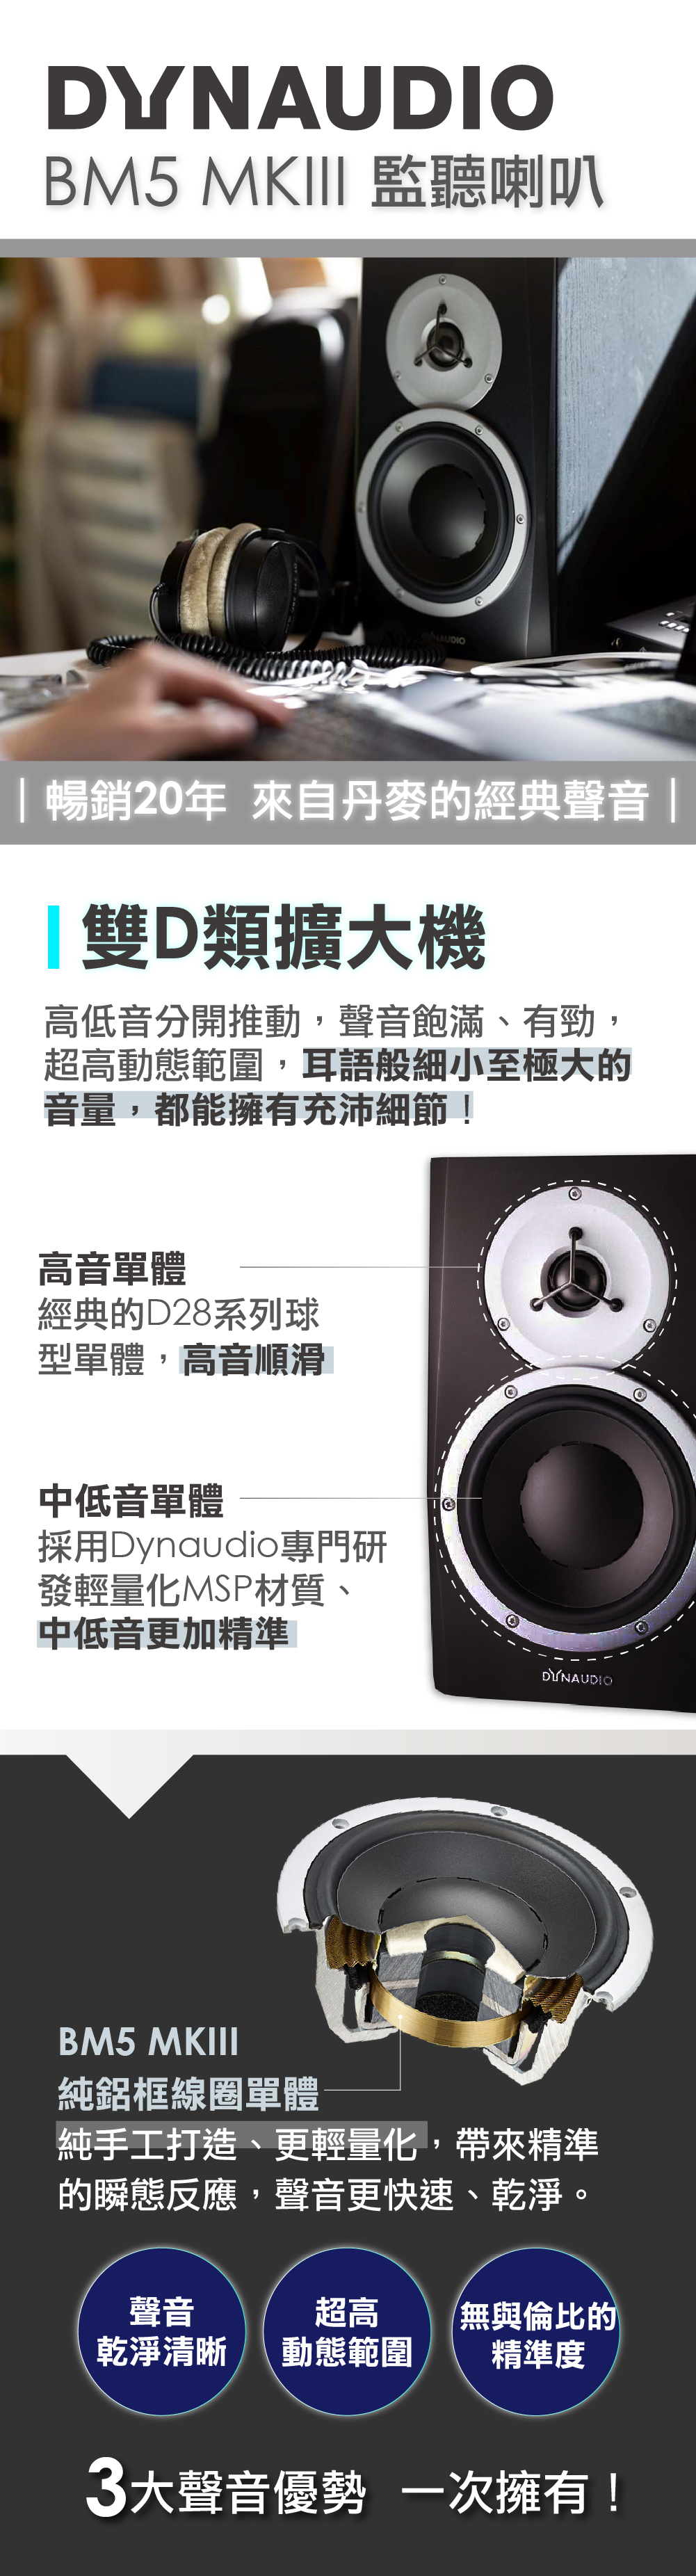 BM5 MKIII 監聽喇叭 暢銷20年 來自丹麥的經典聲音 ||雙D類擴大機高低音分開推動聲音飽滿、有勁,超高動態範圍,耳語般細小至極大的音量,都能擁有充沛細節!高音單體經典的D28系列球型單體,高音順滑中低音單體採用Dynaudio專門研發輕量化MSP材質、中低音更加精準DYNAUDIOBM5 MKIII純鋁框線圈單體純手工打造、更輕量化,帶來精準的瞬態反應,聲音更快速、乾淨。聲音超高無與倫比的乾淨清晰動態範圍精準度3大聲音優勢一次擁有!